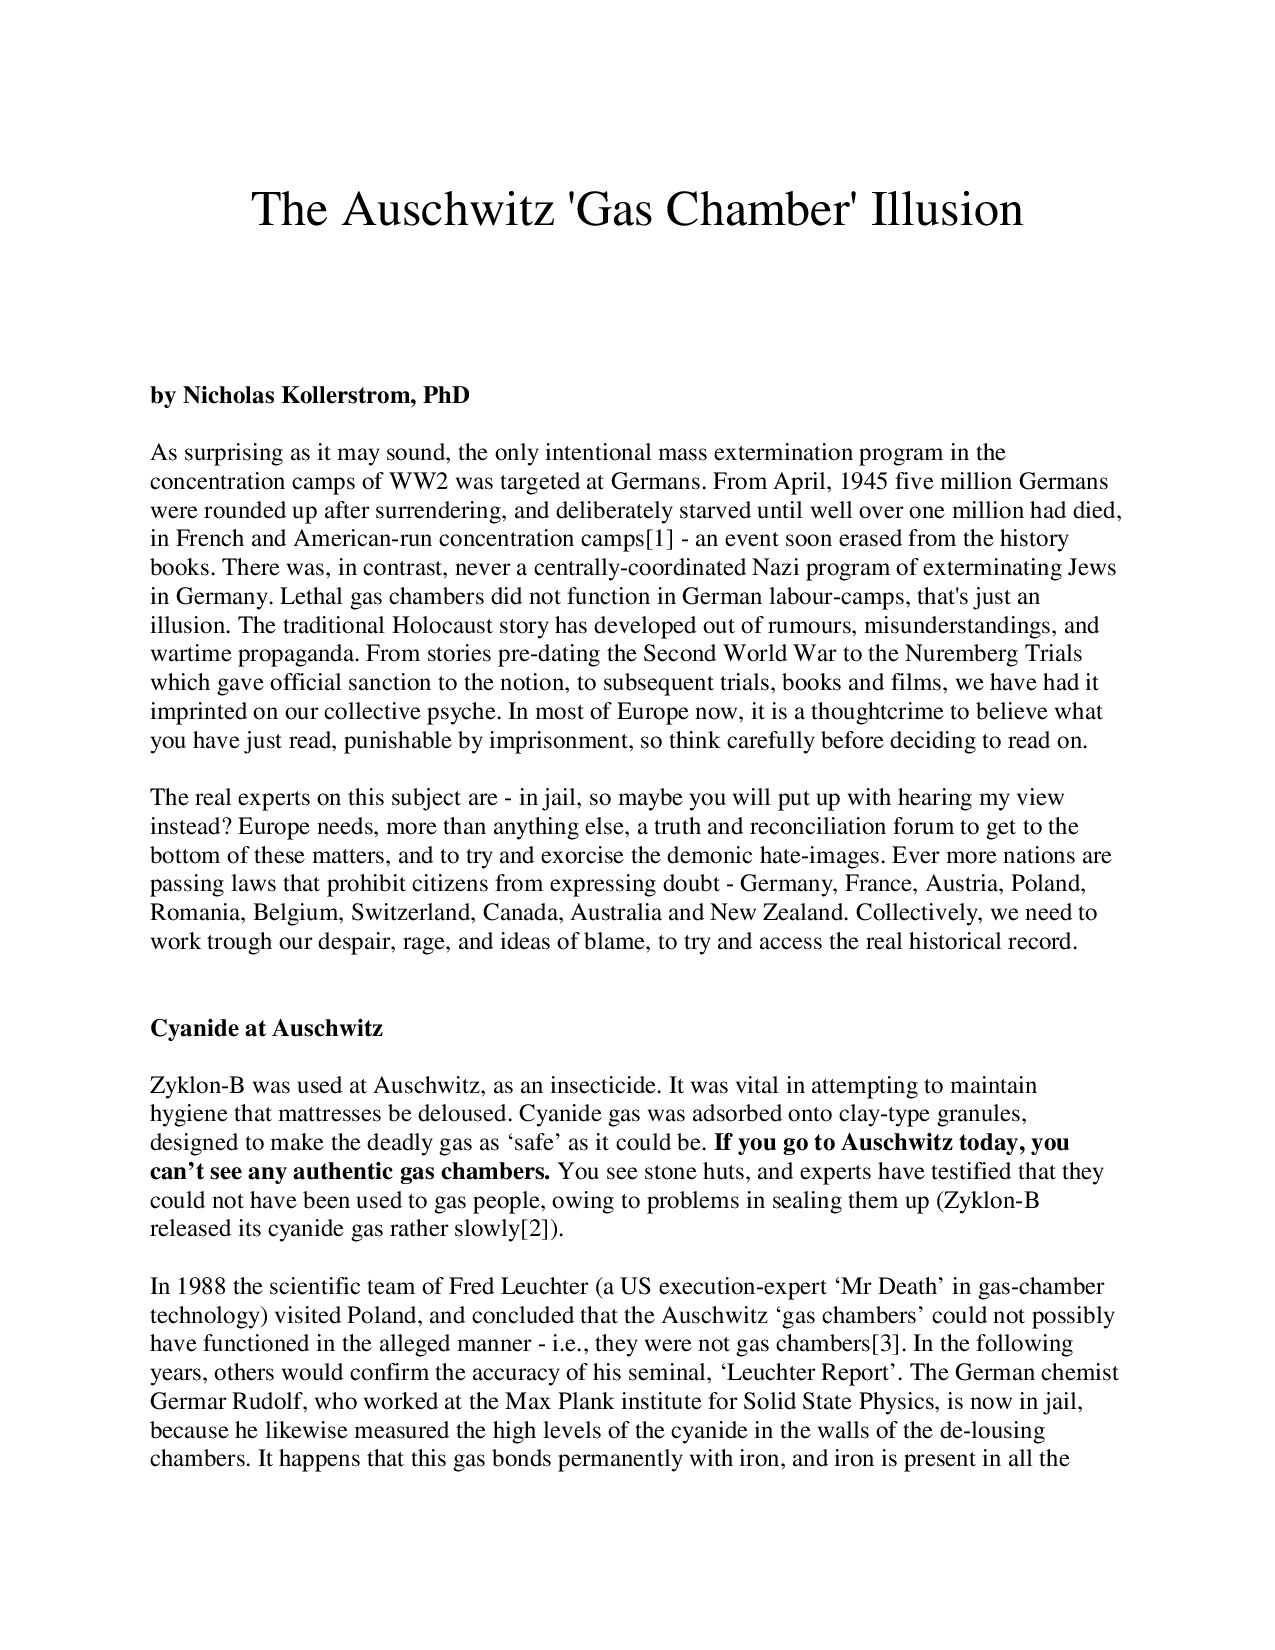 Microsoft Word - The Auschwitz 'Gas Chamber' Illusion.doc